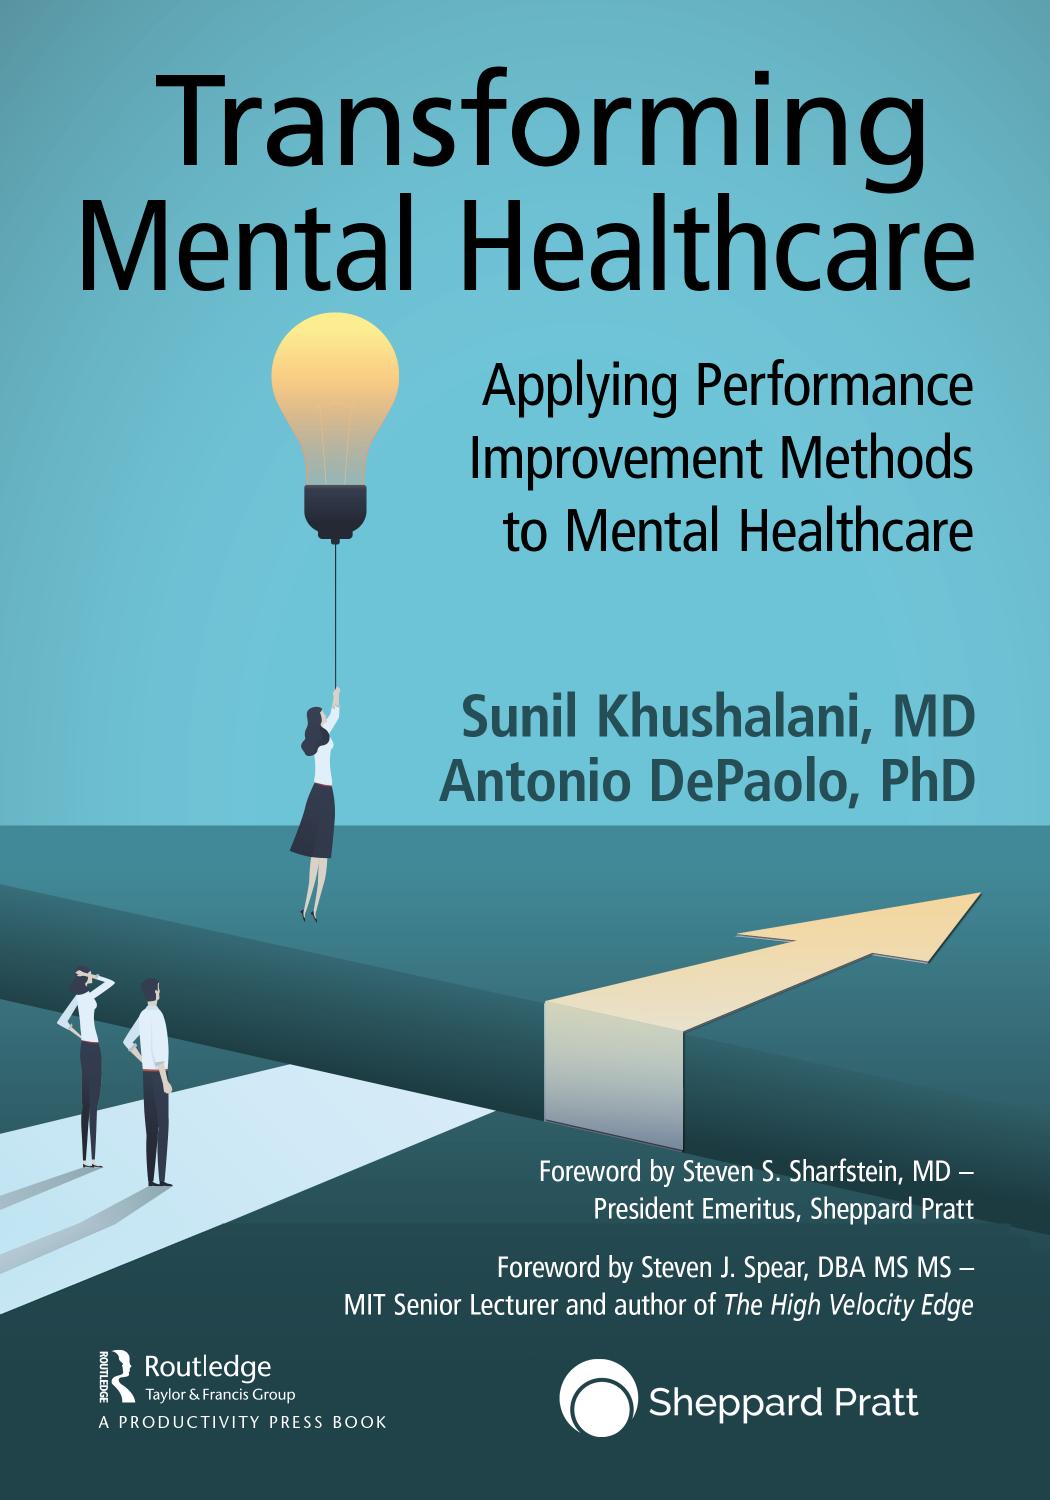 Transforming Mental Healthcare: Applying Performance Improvement Methods to Mental Healthcare by Sunil Khushalani Antonio DePaolo